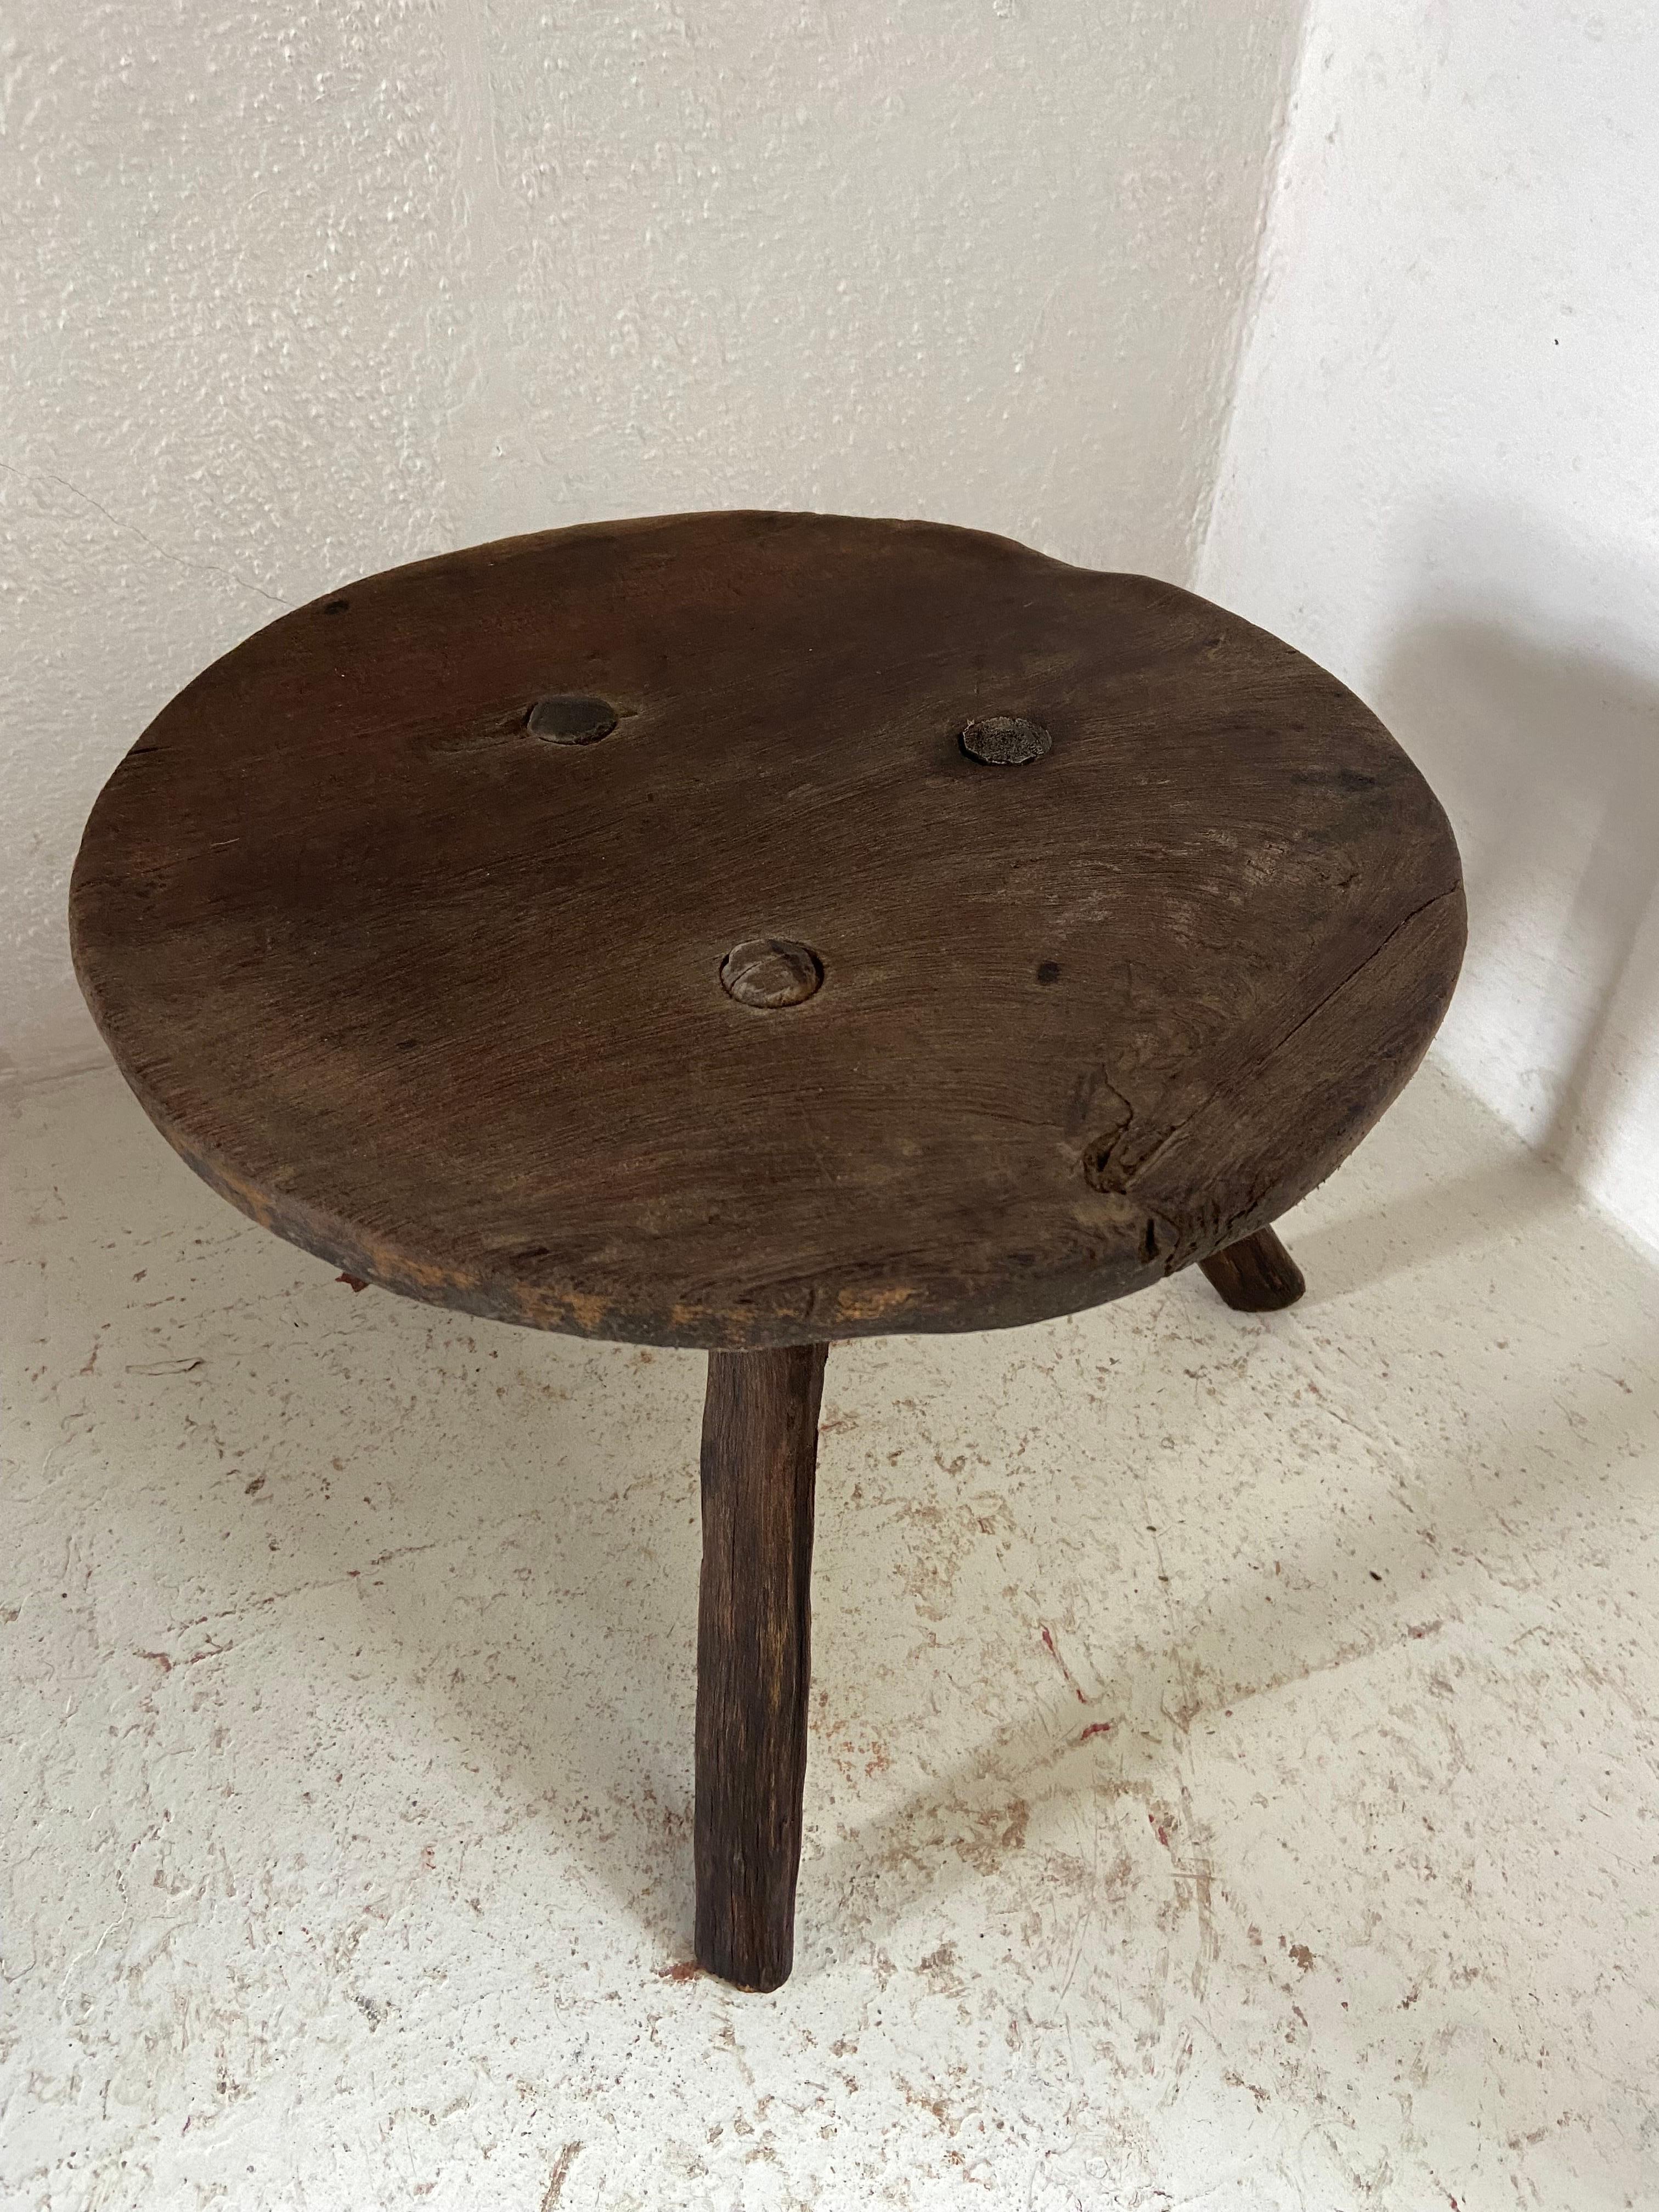 Mid-20th century hardwood stool from San Luis Potosí, Mexico.